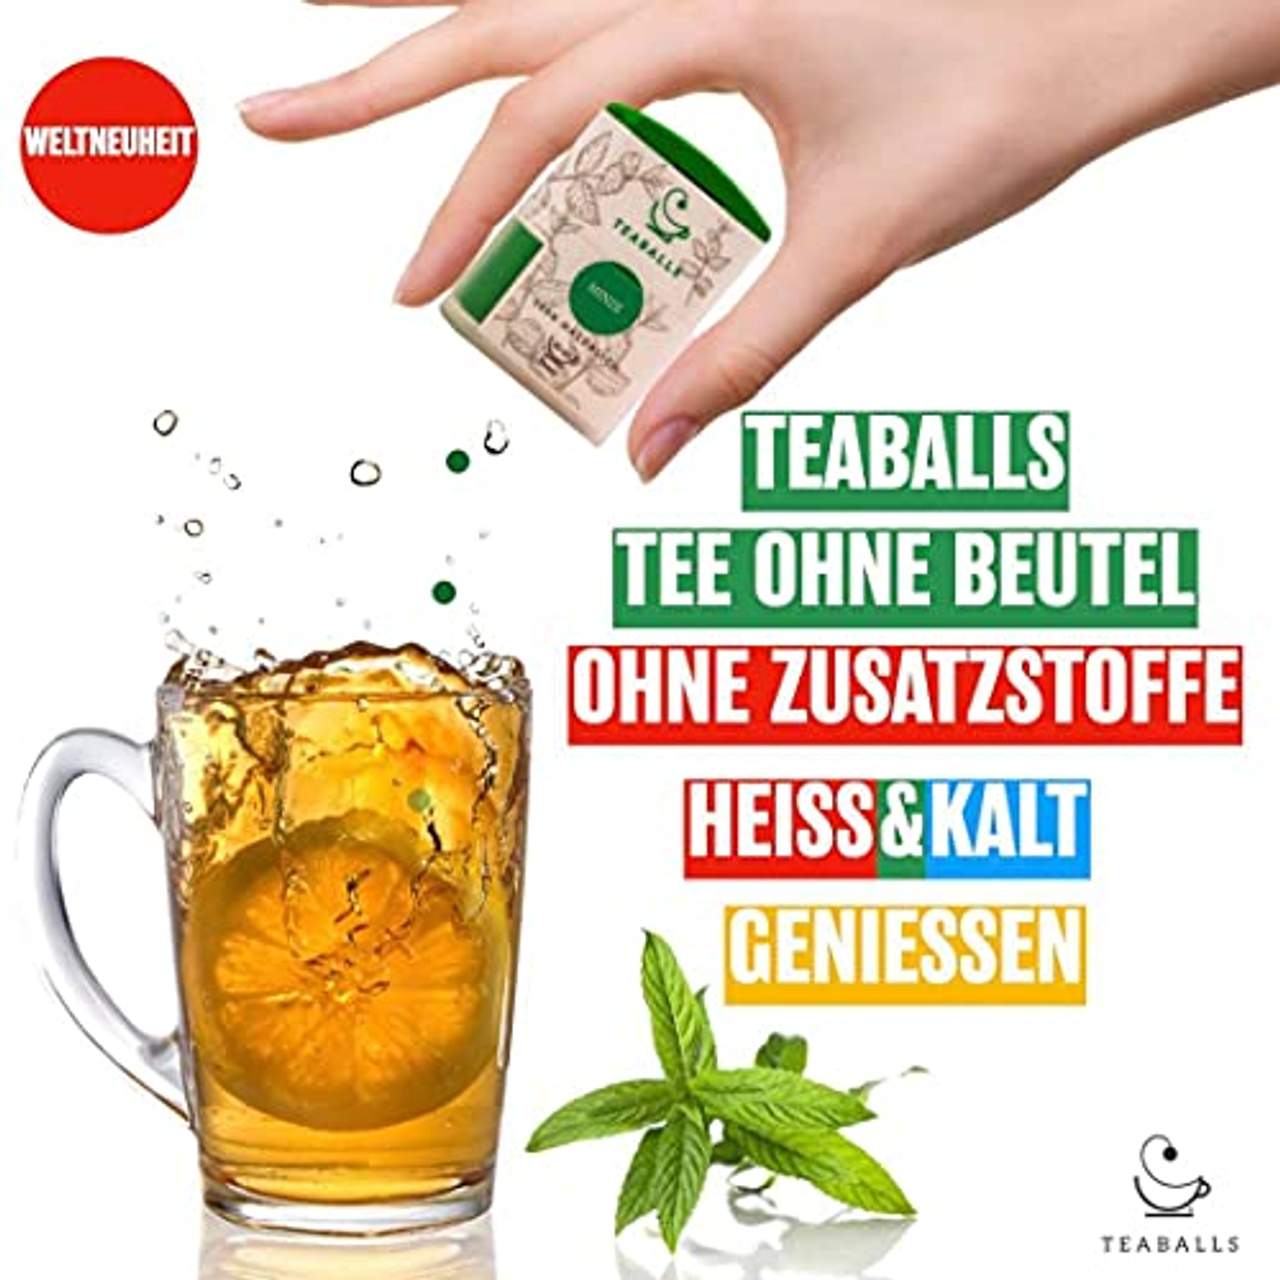 Teaballs Premium Lifestyle Edition 10x Naturtrüb Sorten